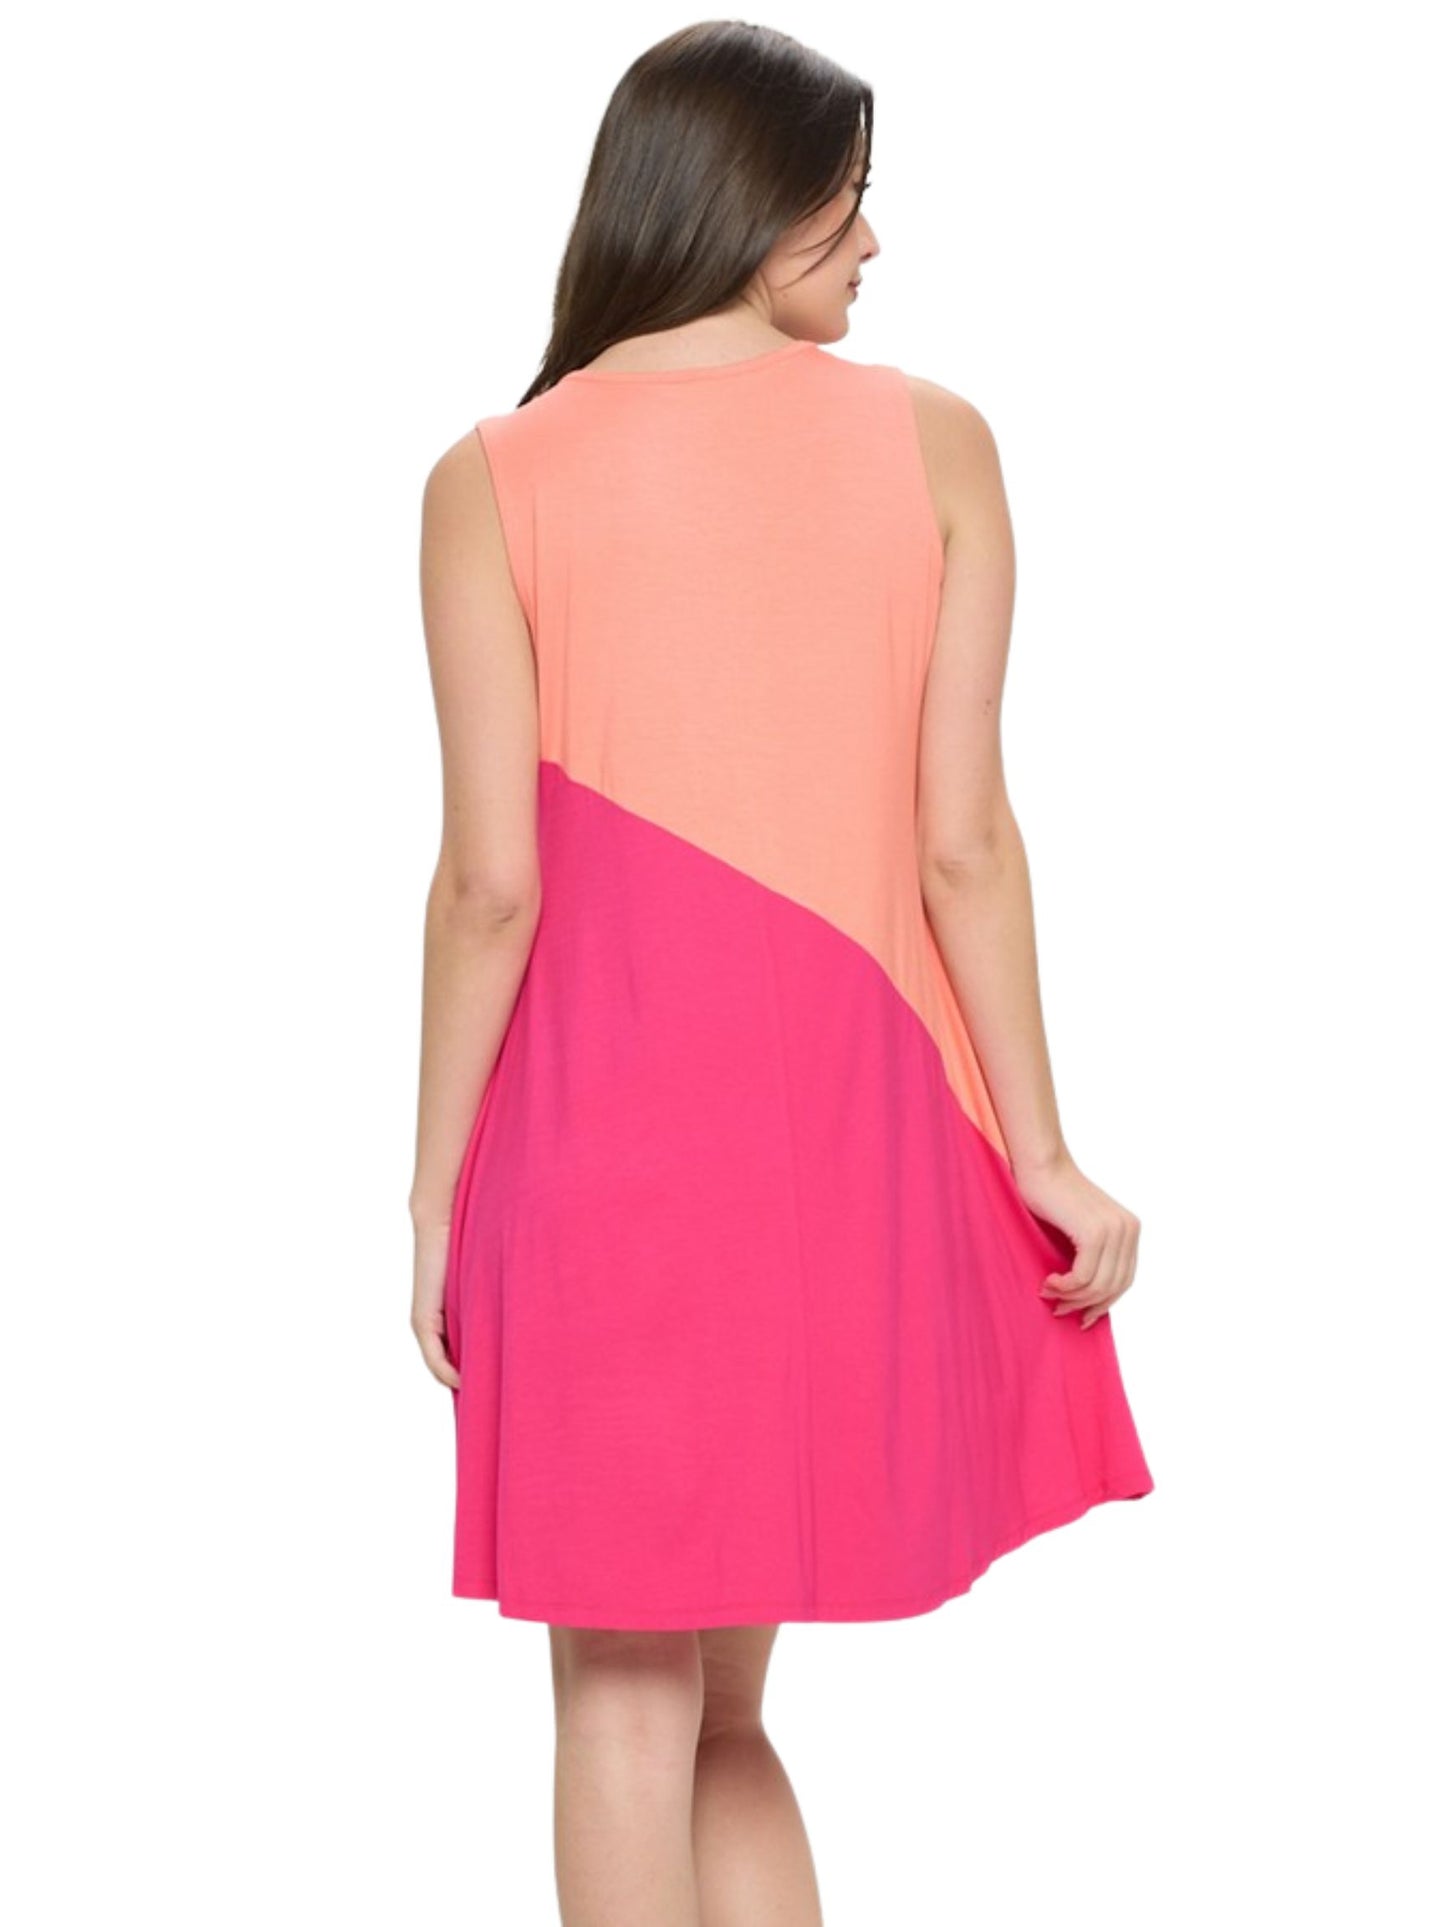 Diagonal Colorblocked Dress - Peach/Fuchsia